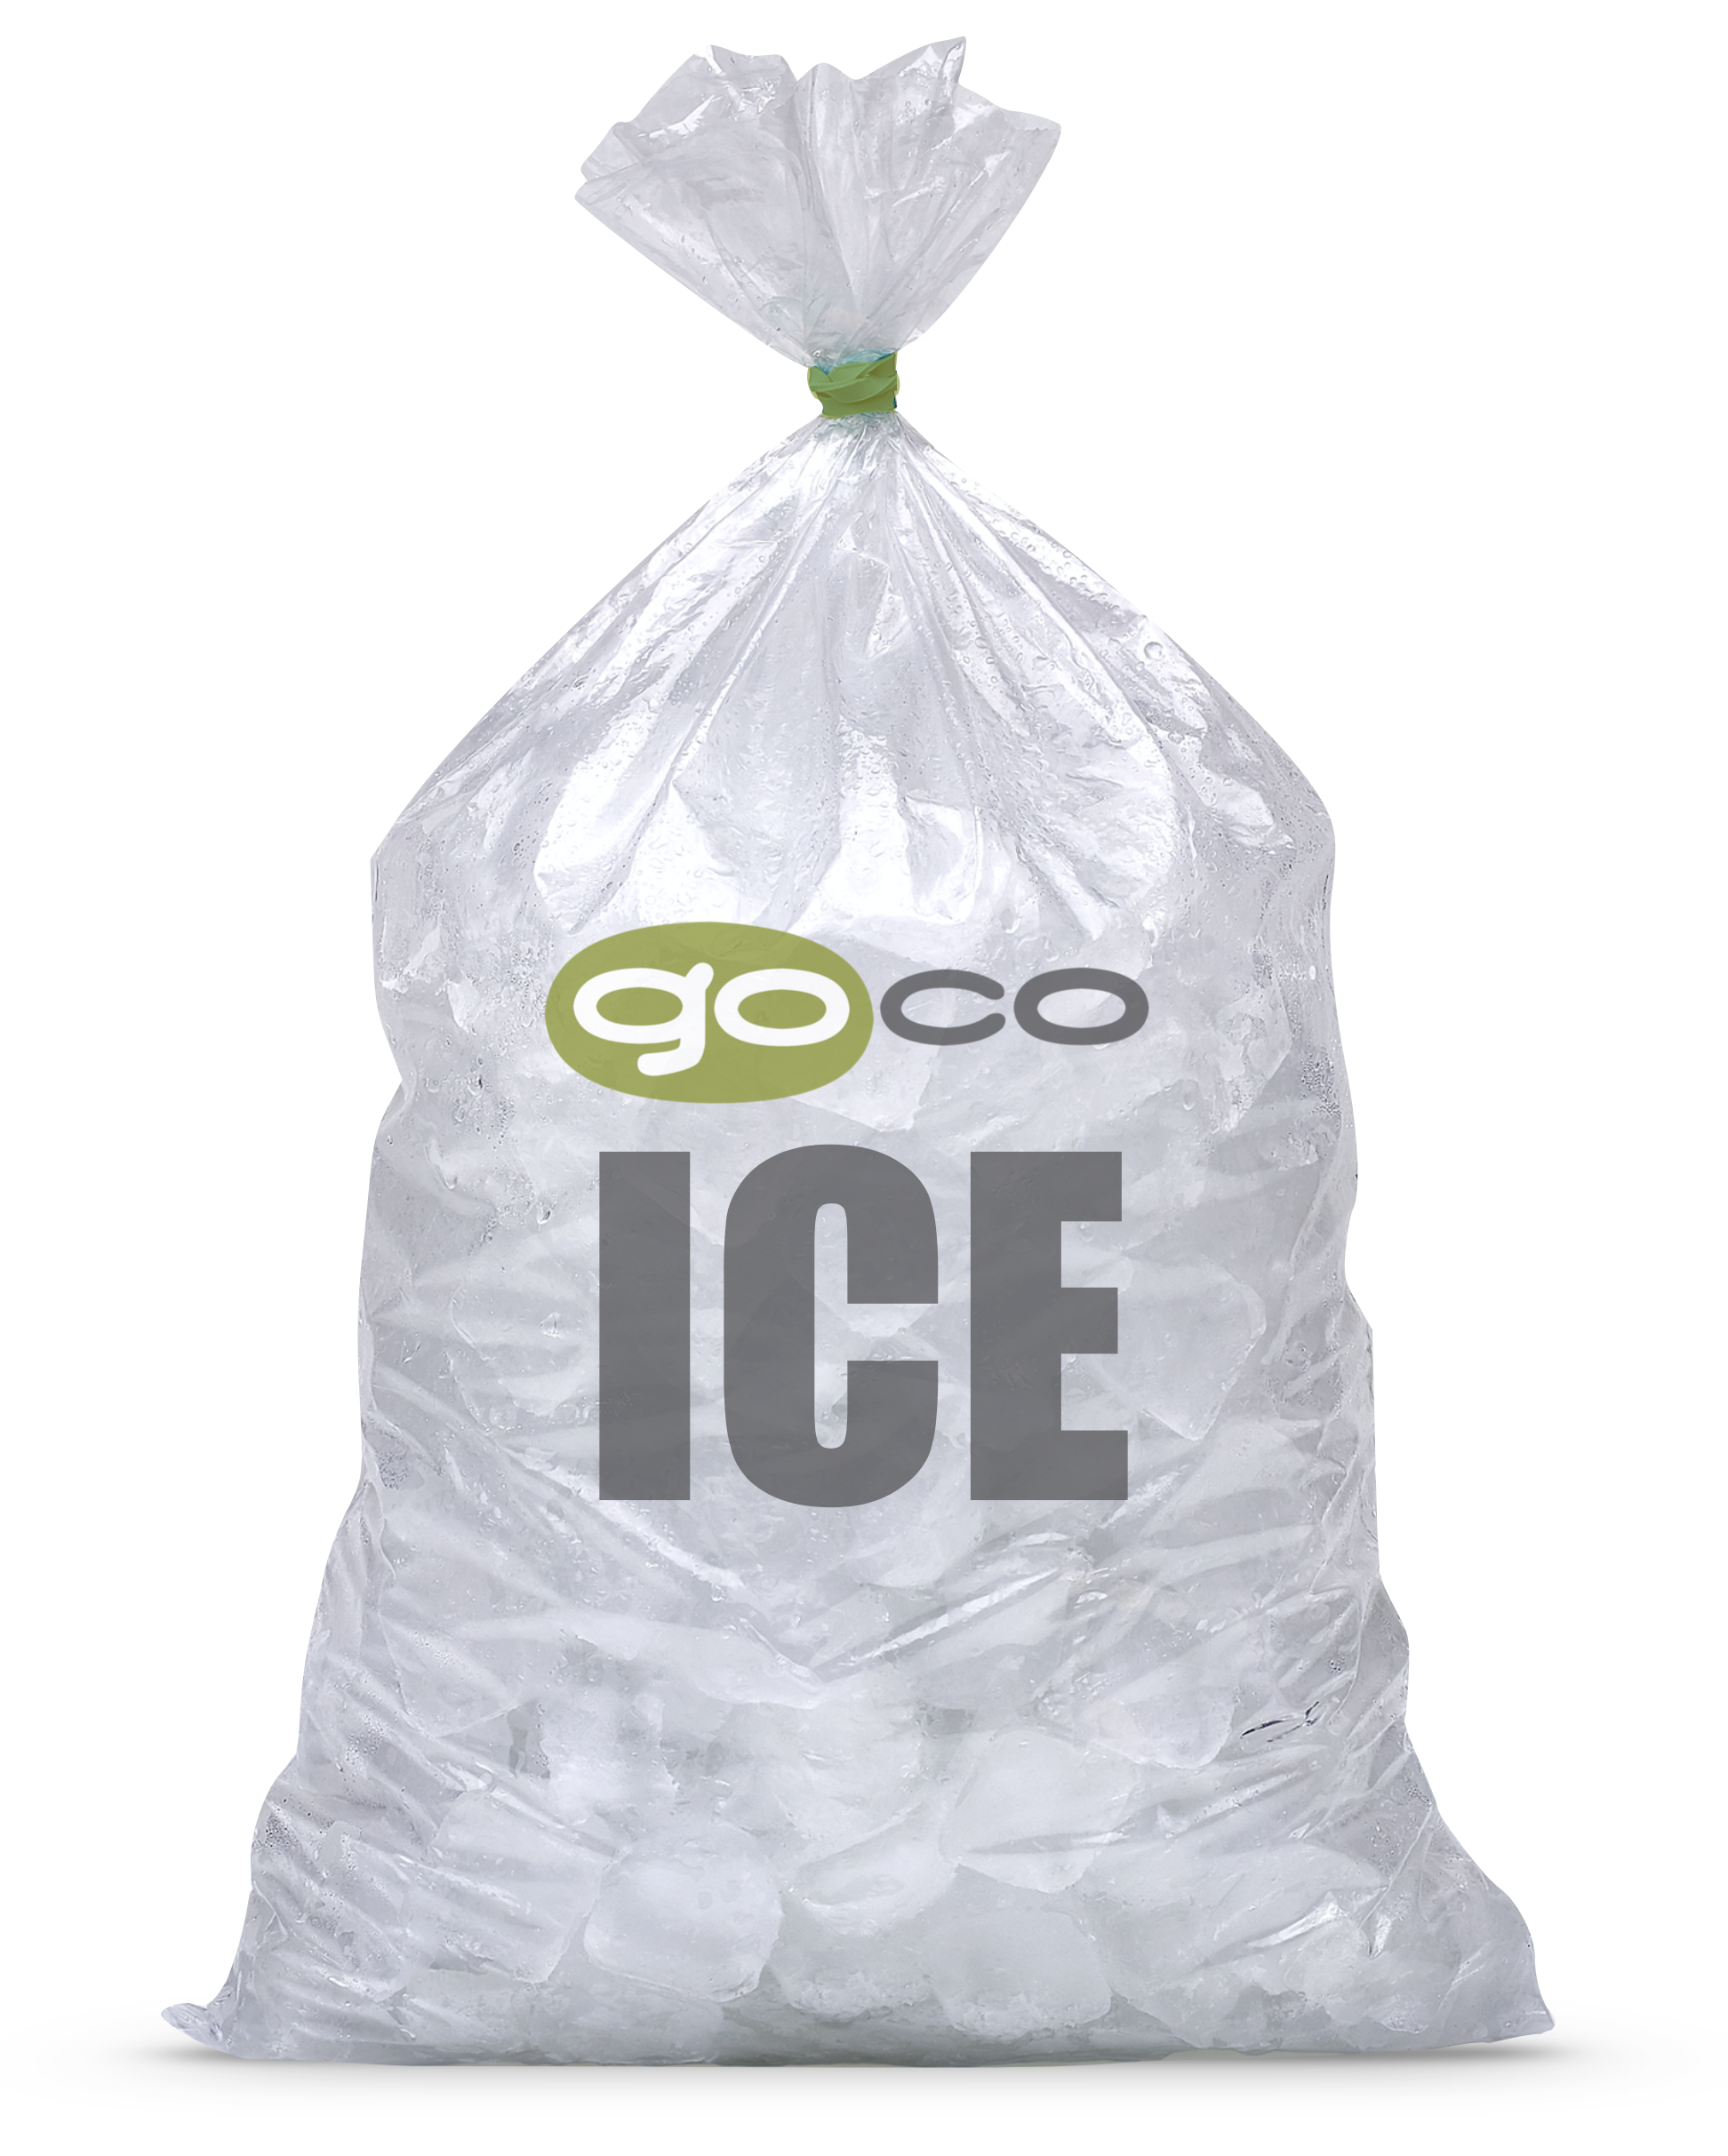 Bagged Ice